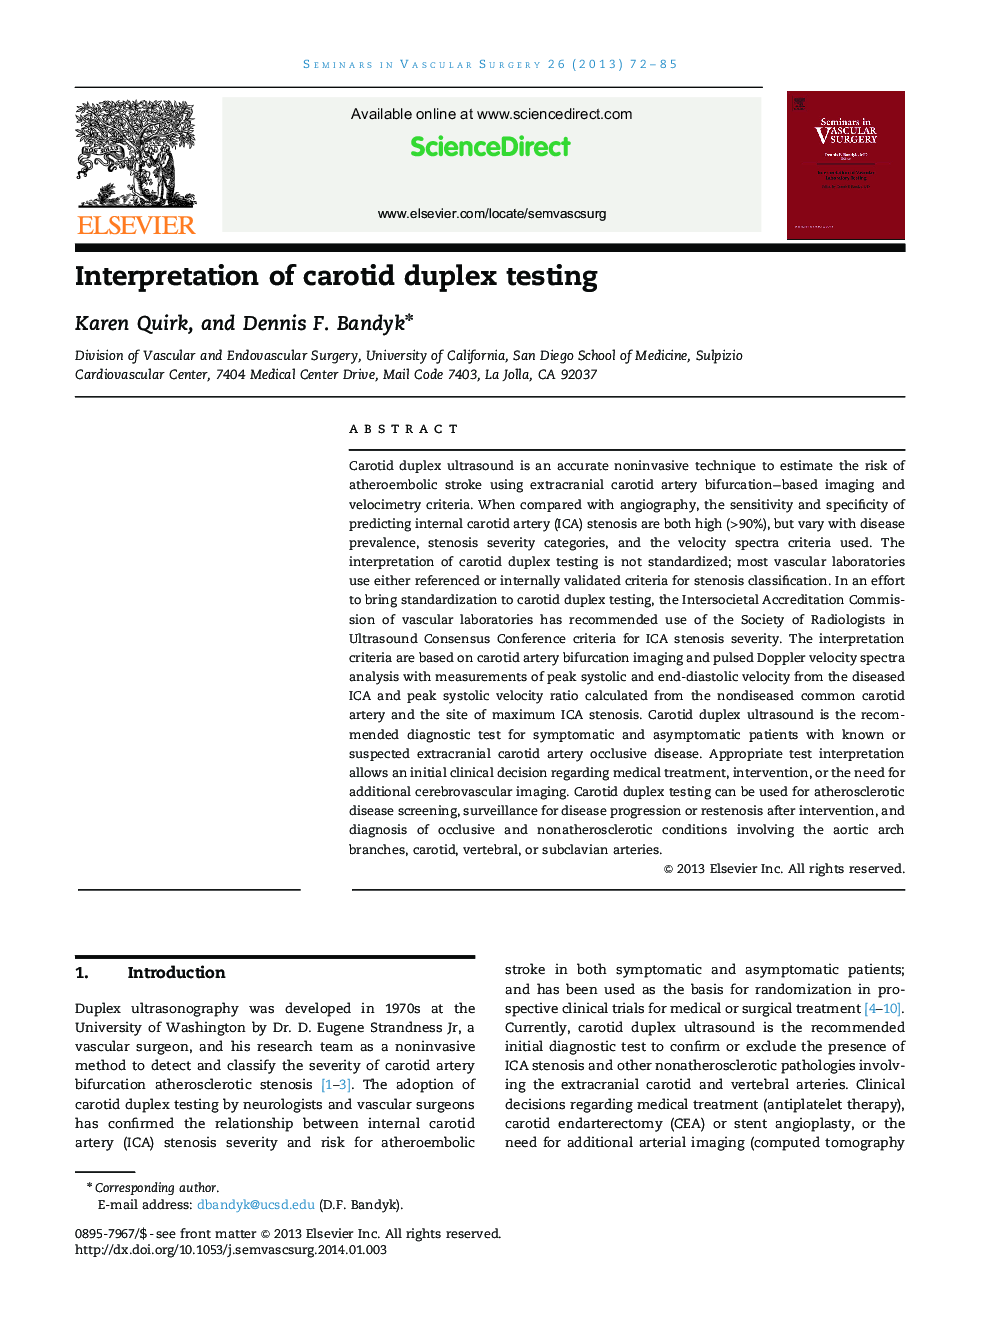 Interpretation of carotid duplex testing